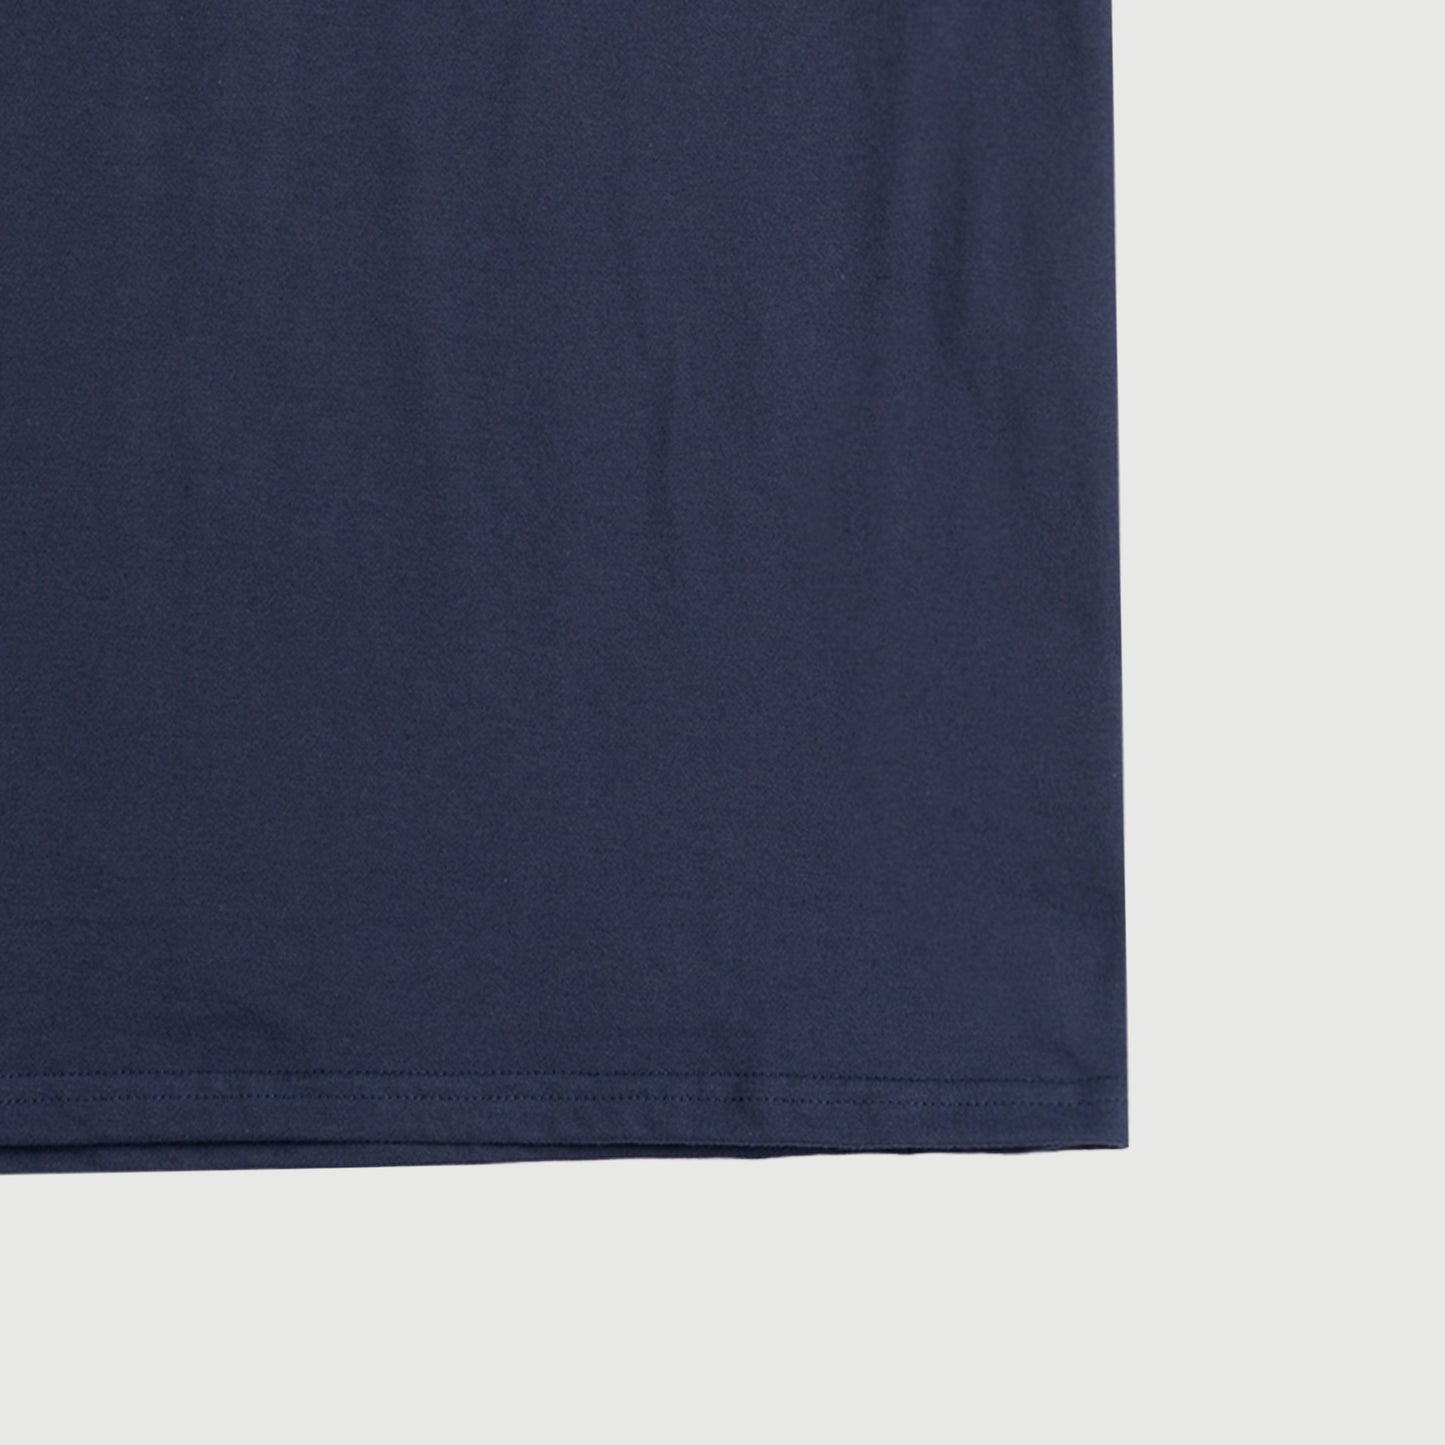 Petrol Basic Tees for Men Slim Fitting Shirt CVC Jersey Fabric Trendy fashion Casual Top Navy Blue T-shirt for Men 145154-U (Navy Blue)